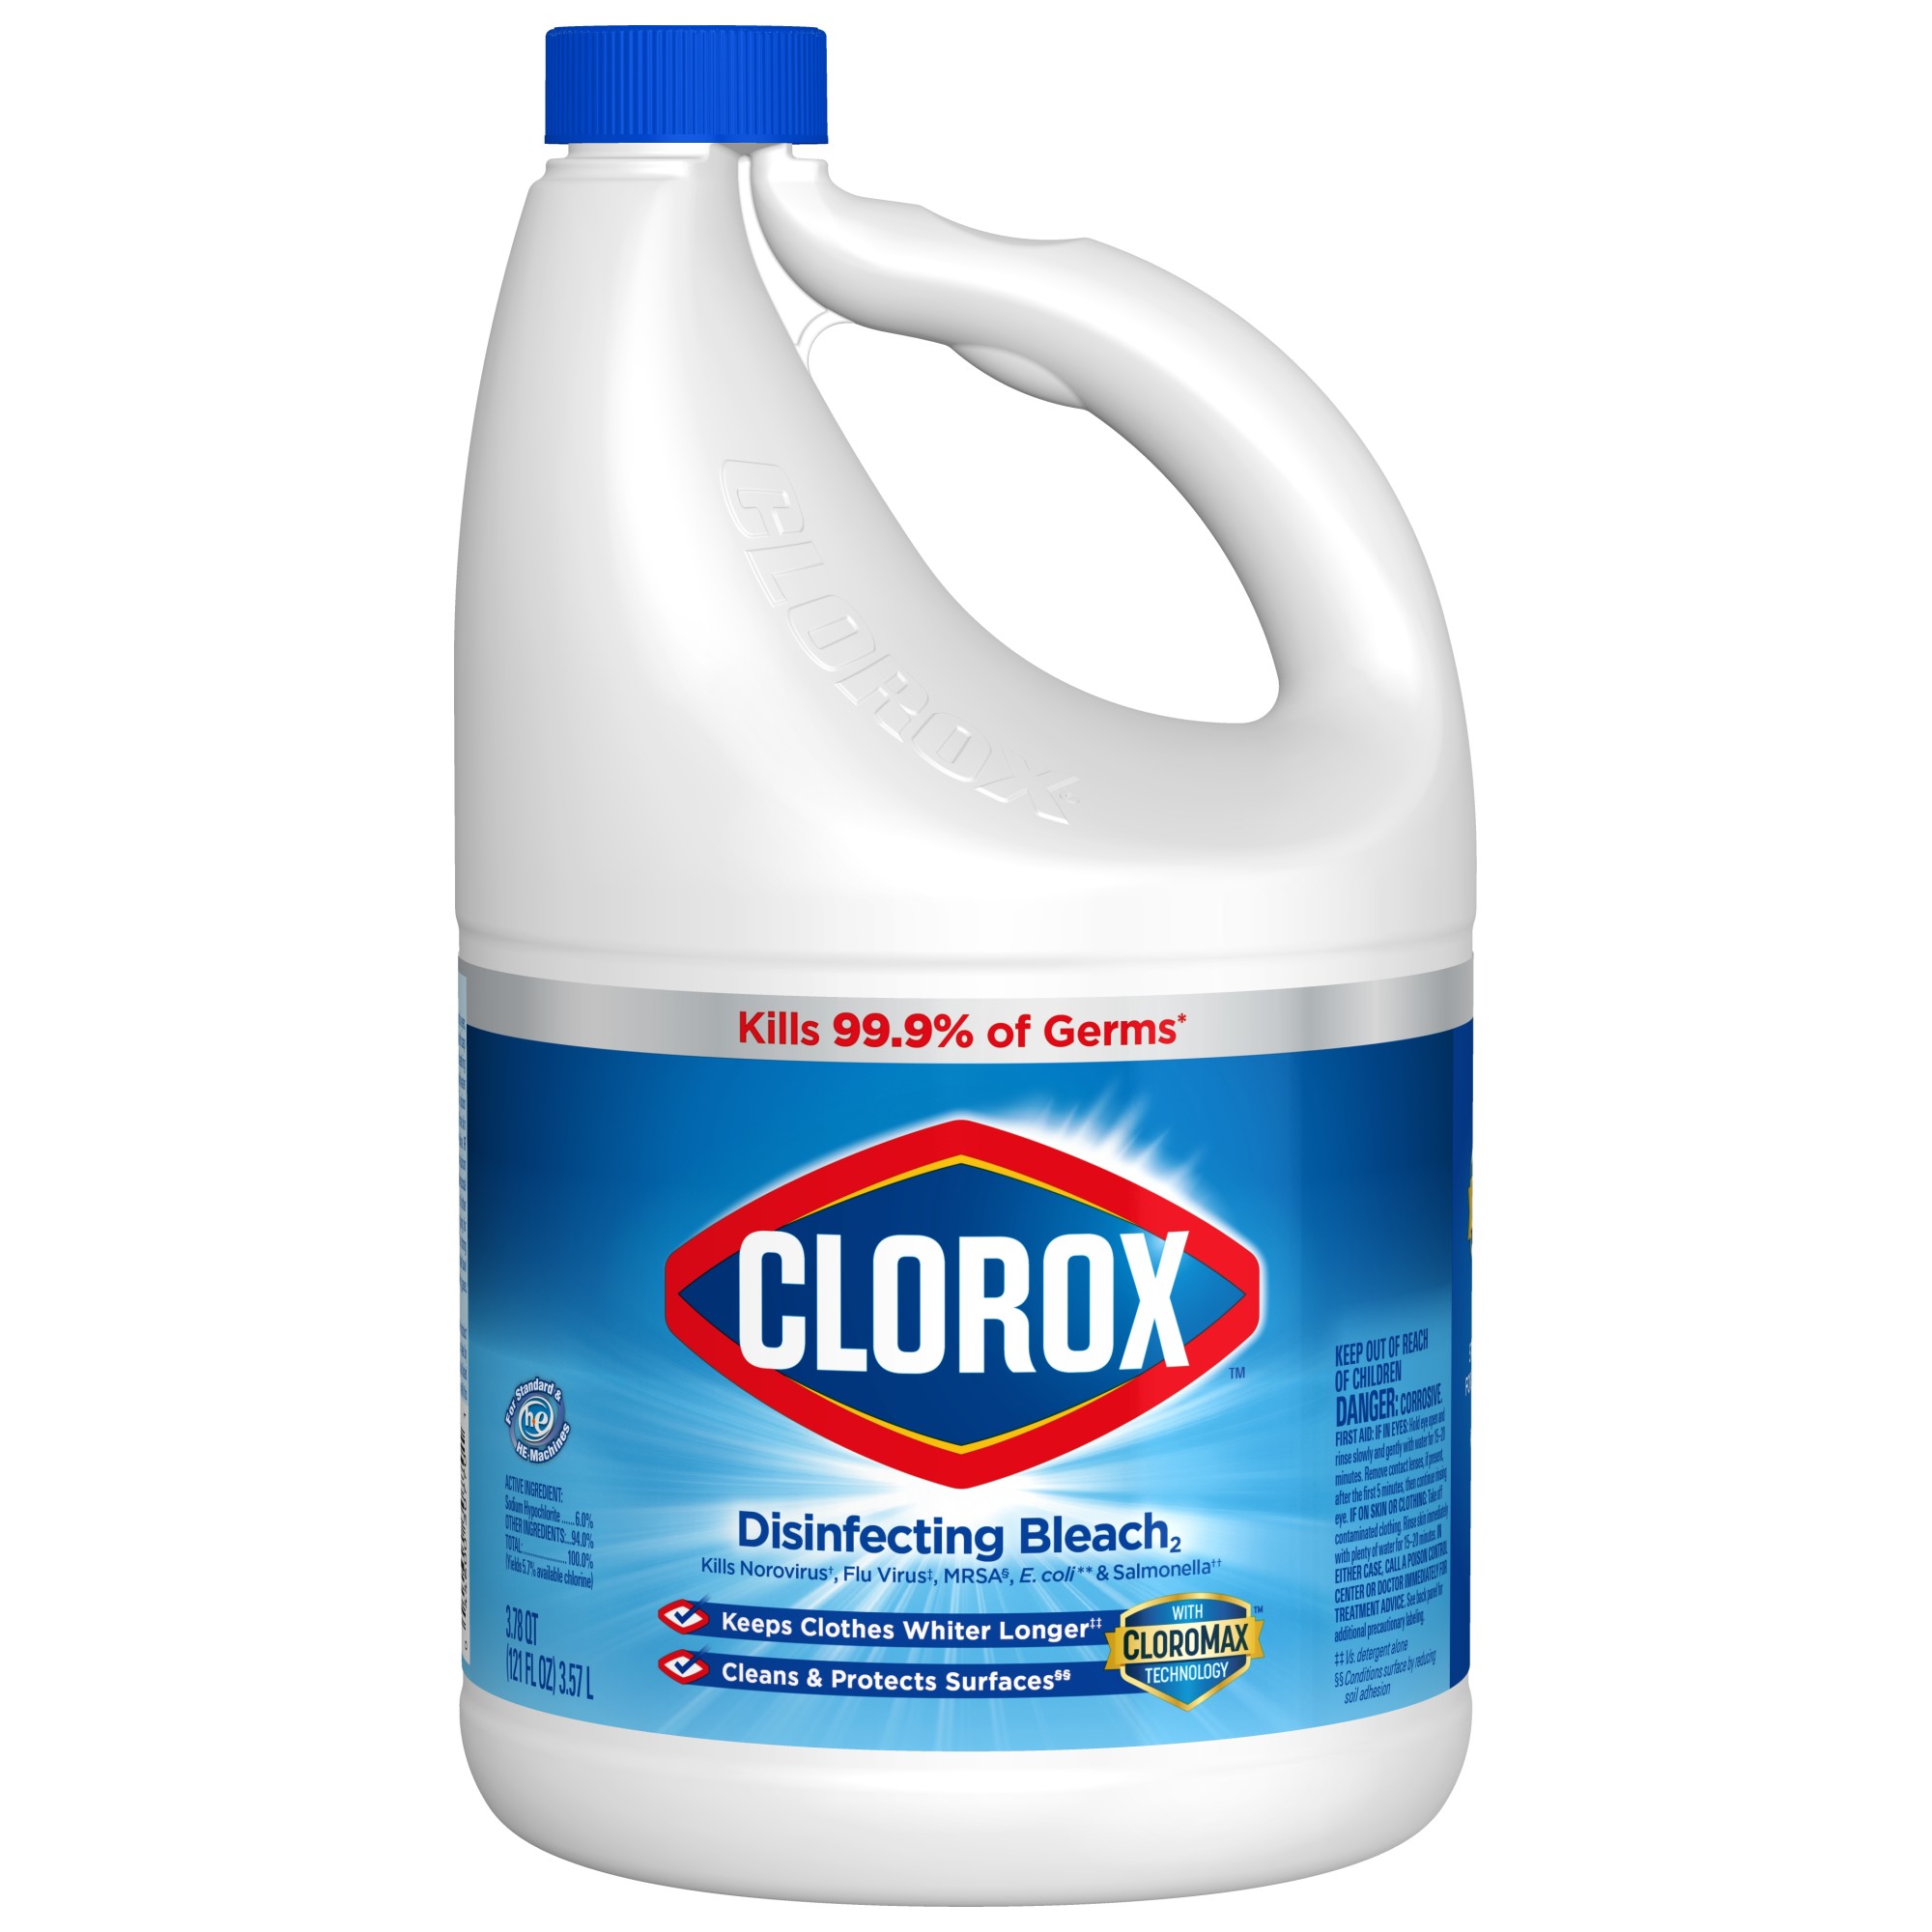 Clorox Disinfecting Bleach, Regular - 121 Ounce Bottle - image 1 of 17